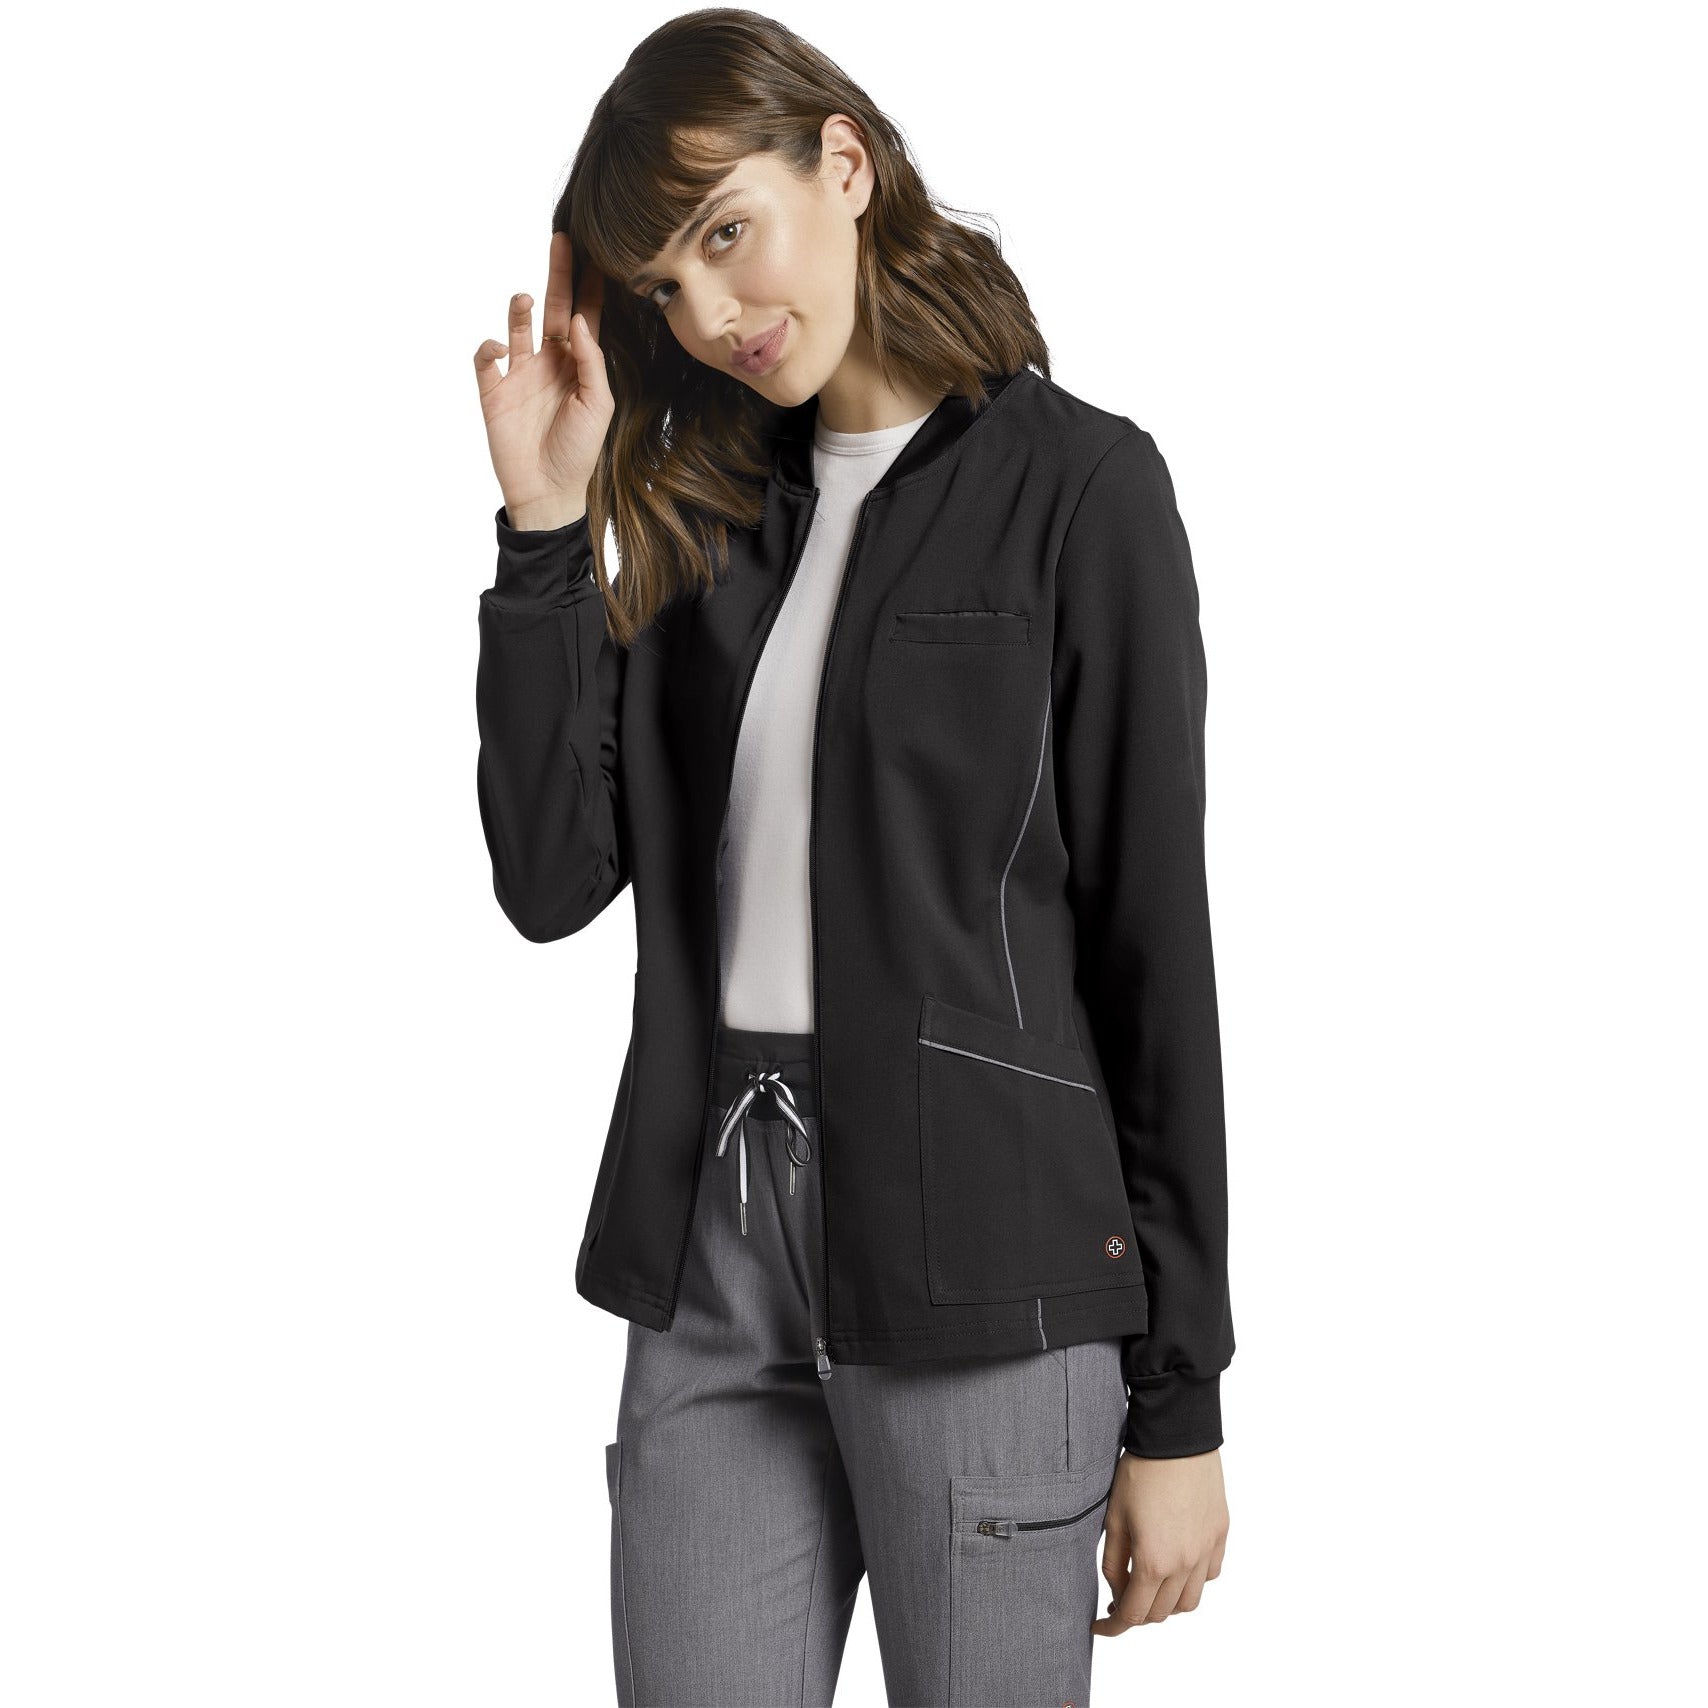 V-TESS Women's Zip Front Jacket & Women's Cargo Scrub Pant 953/337 *COMPLETE SET*